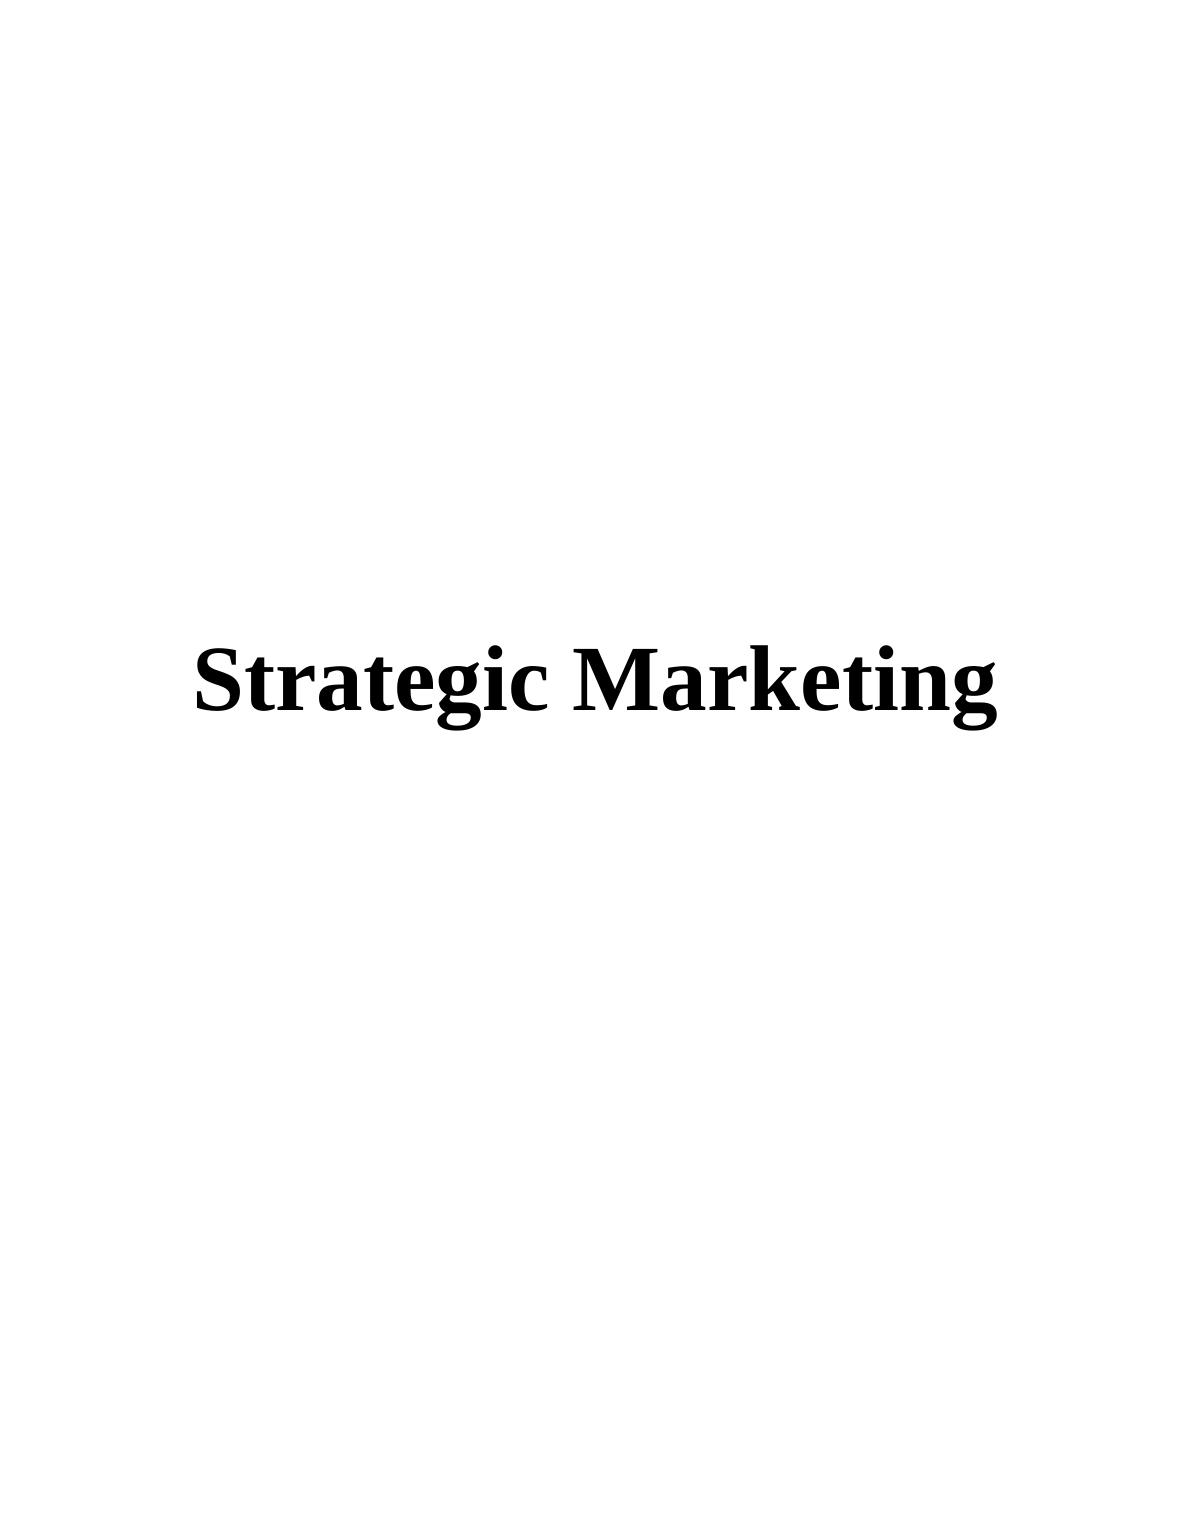 Strategic Marketing: Market Entry Options, Segmentation, and SWOT Analysis_1